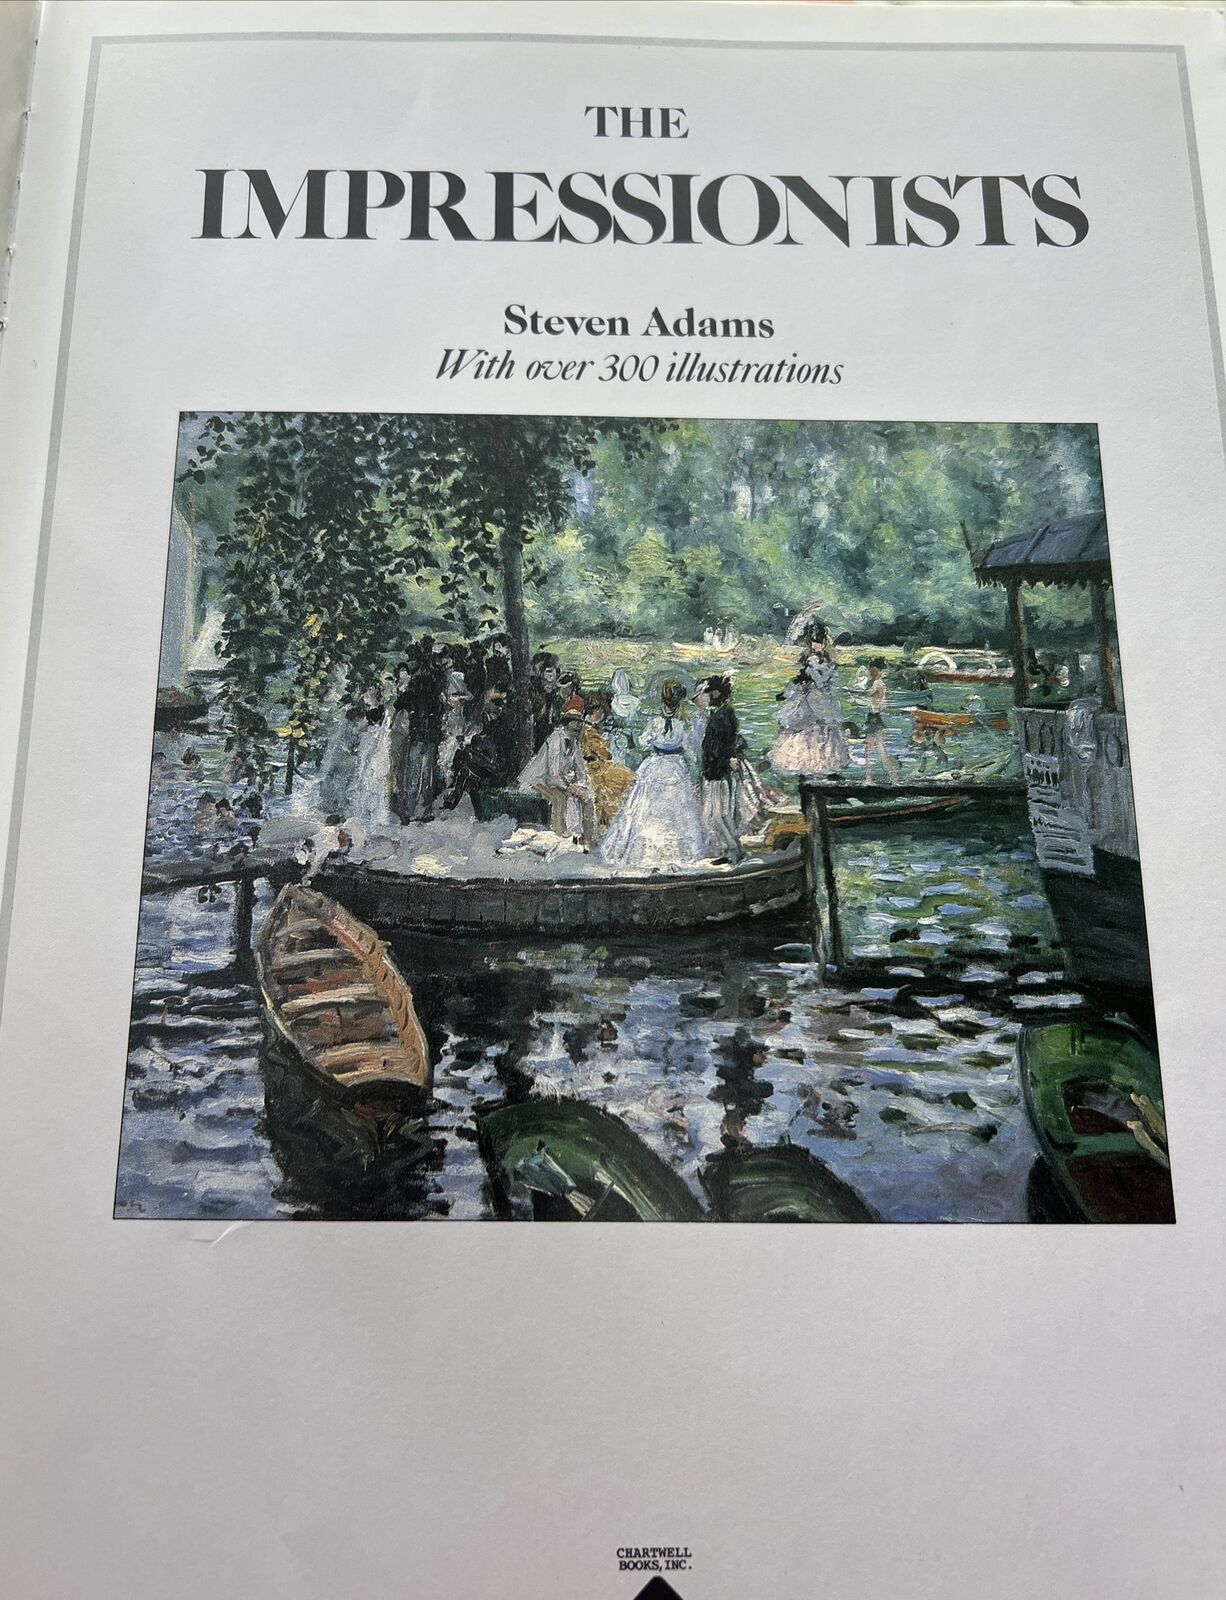 The Impressionists by Steven Adams Color Illustrations 2000 Print Ed. DJ Missing